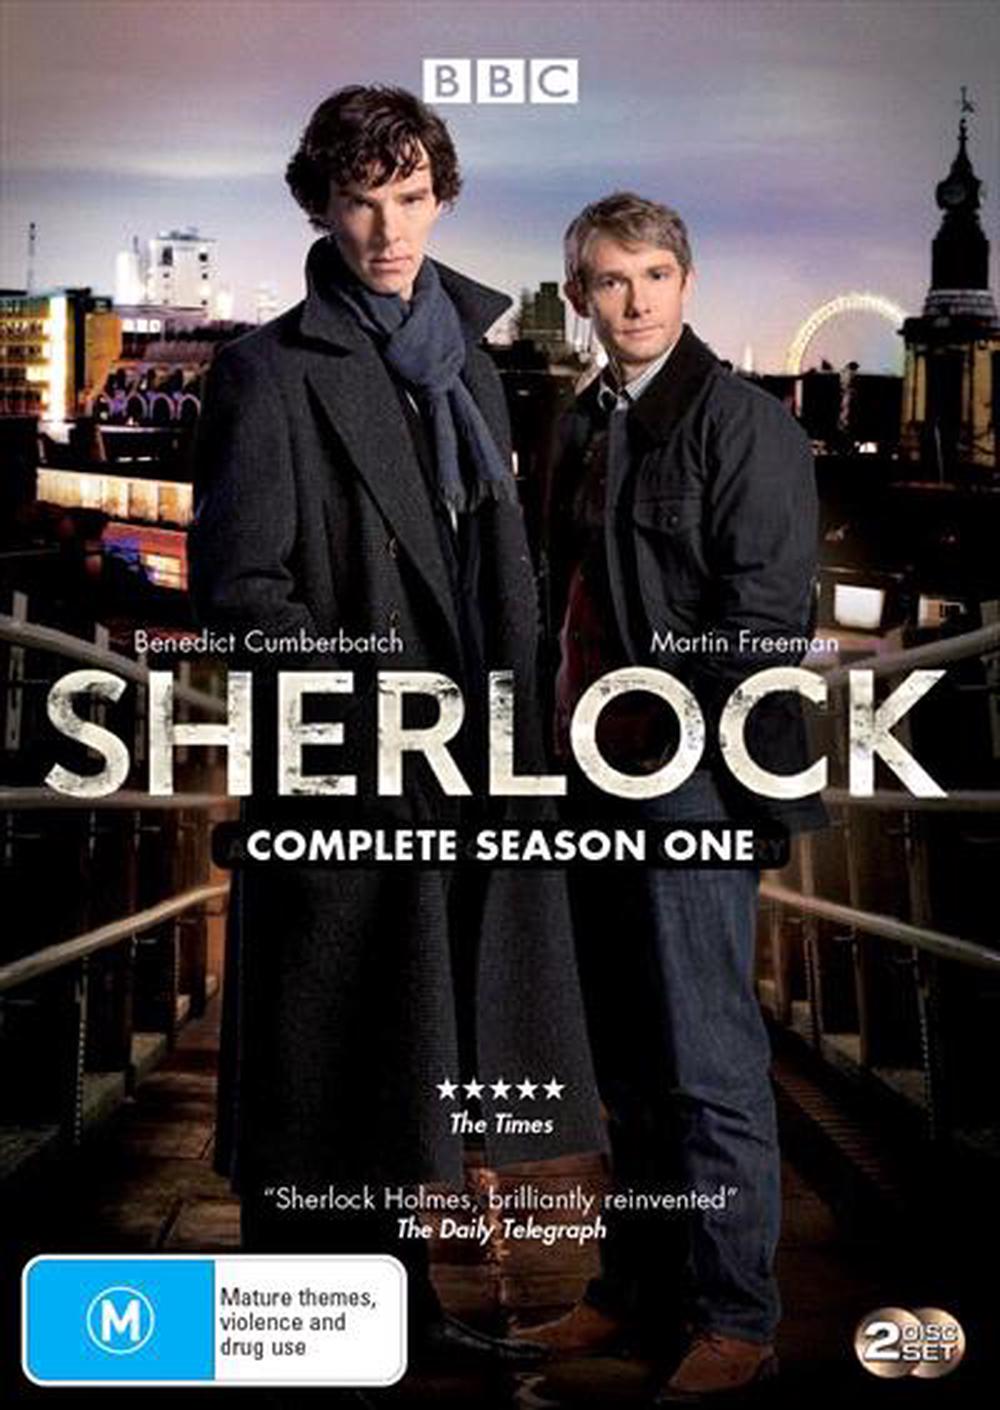 Sherlock: Series 1, DVD | Buy online at The Nile